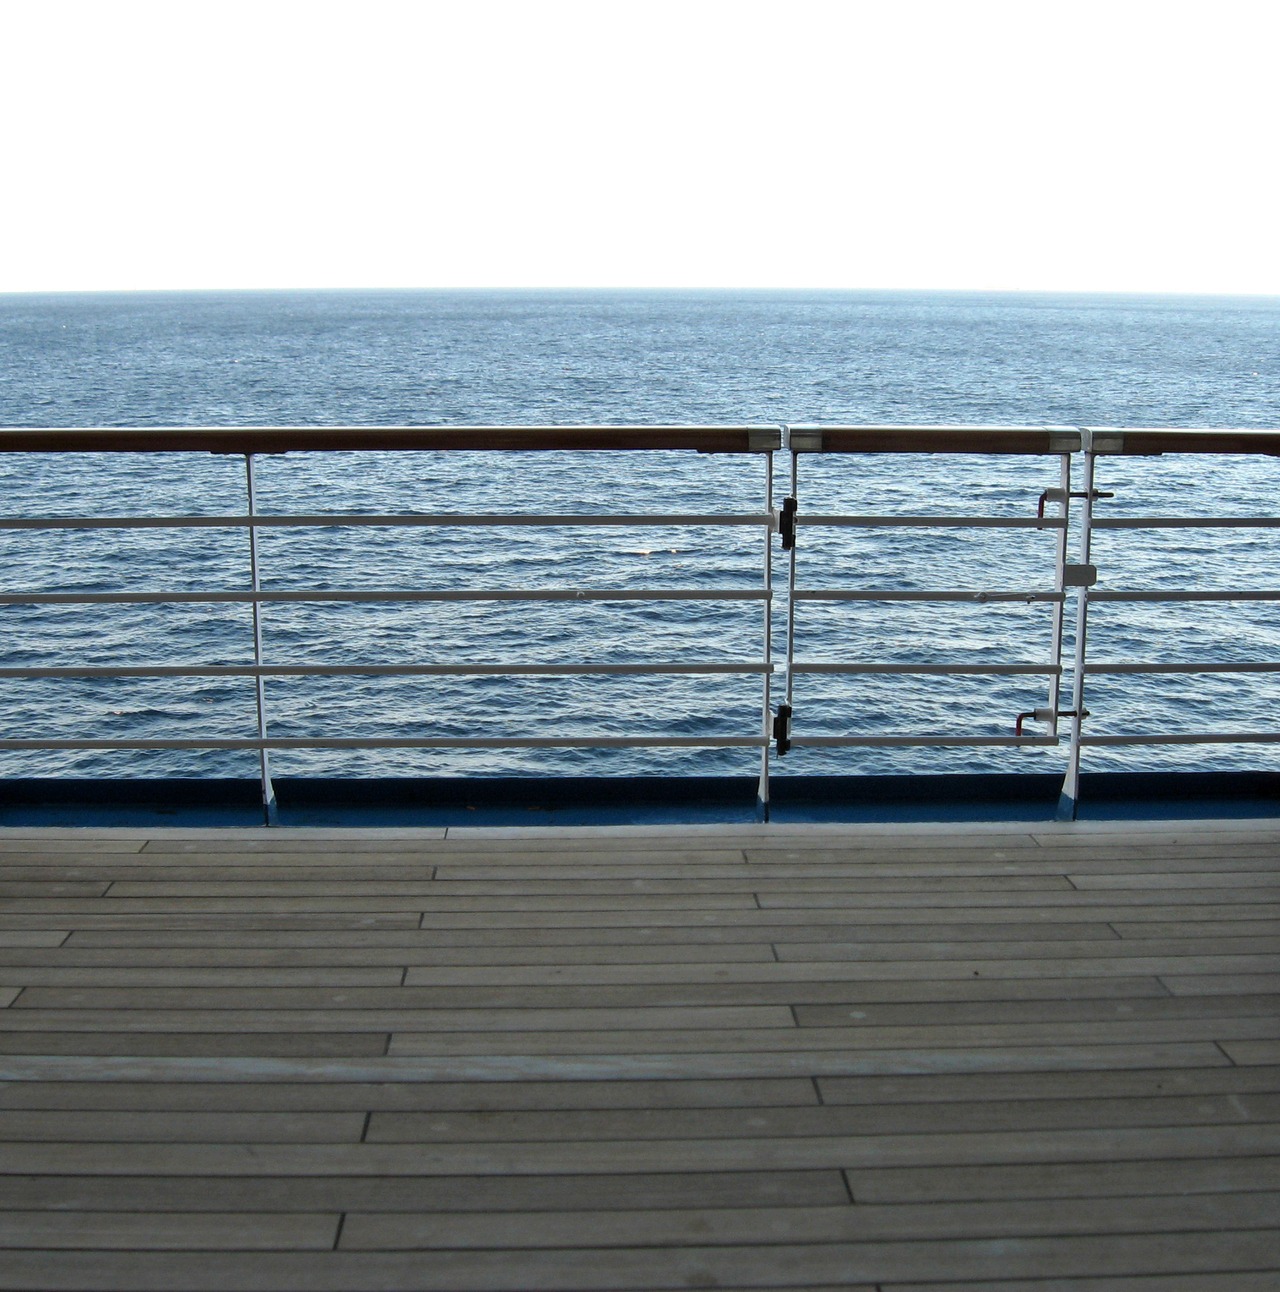 The Atlantic Ocean and railing along the Deck 10 starboard exterior corridor on Carnival Sensation.